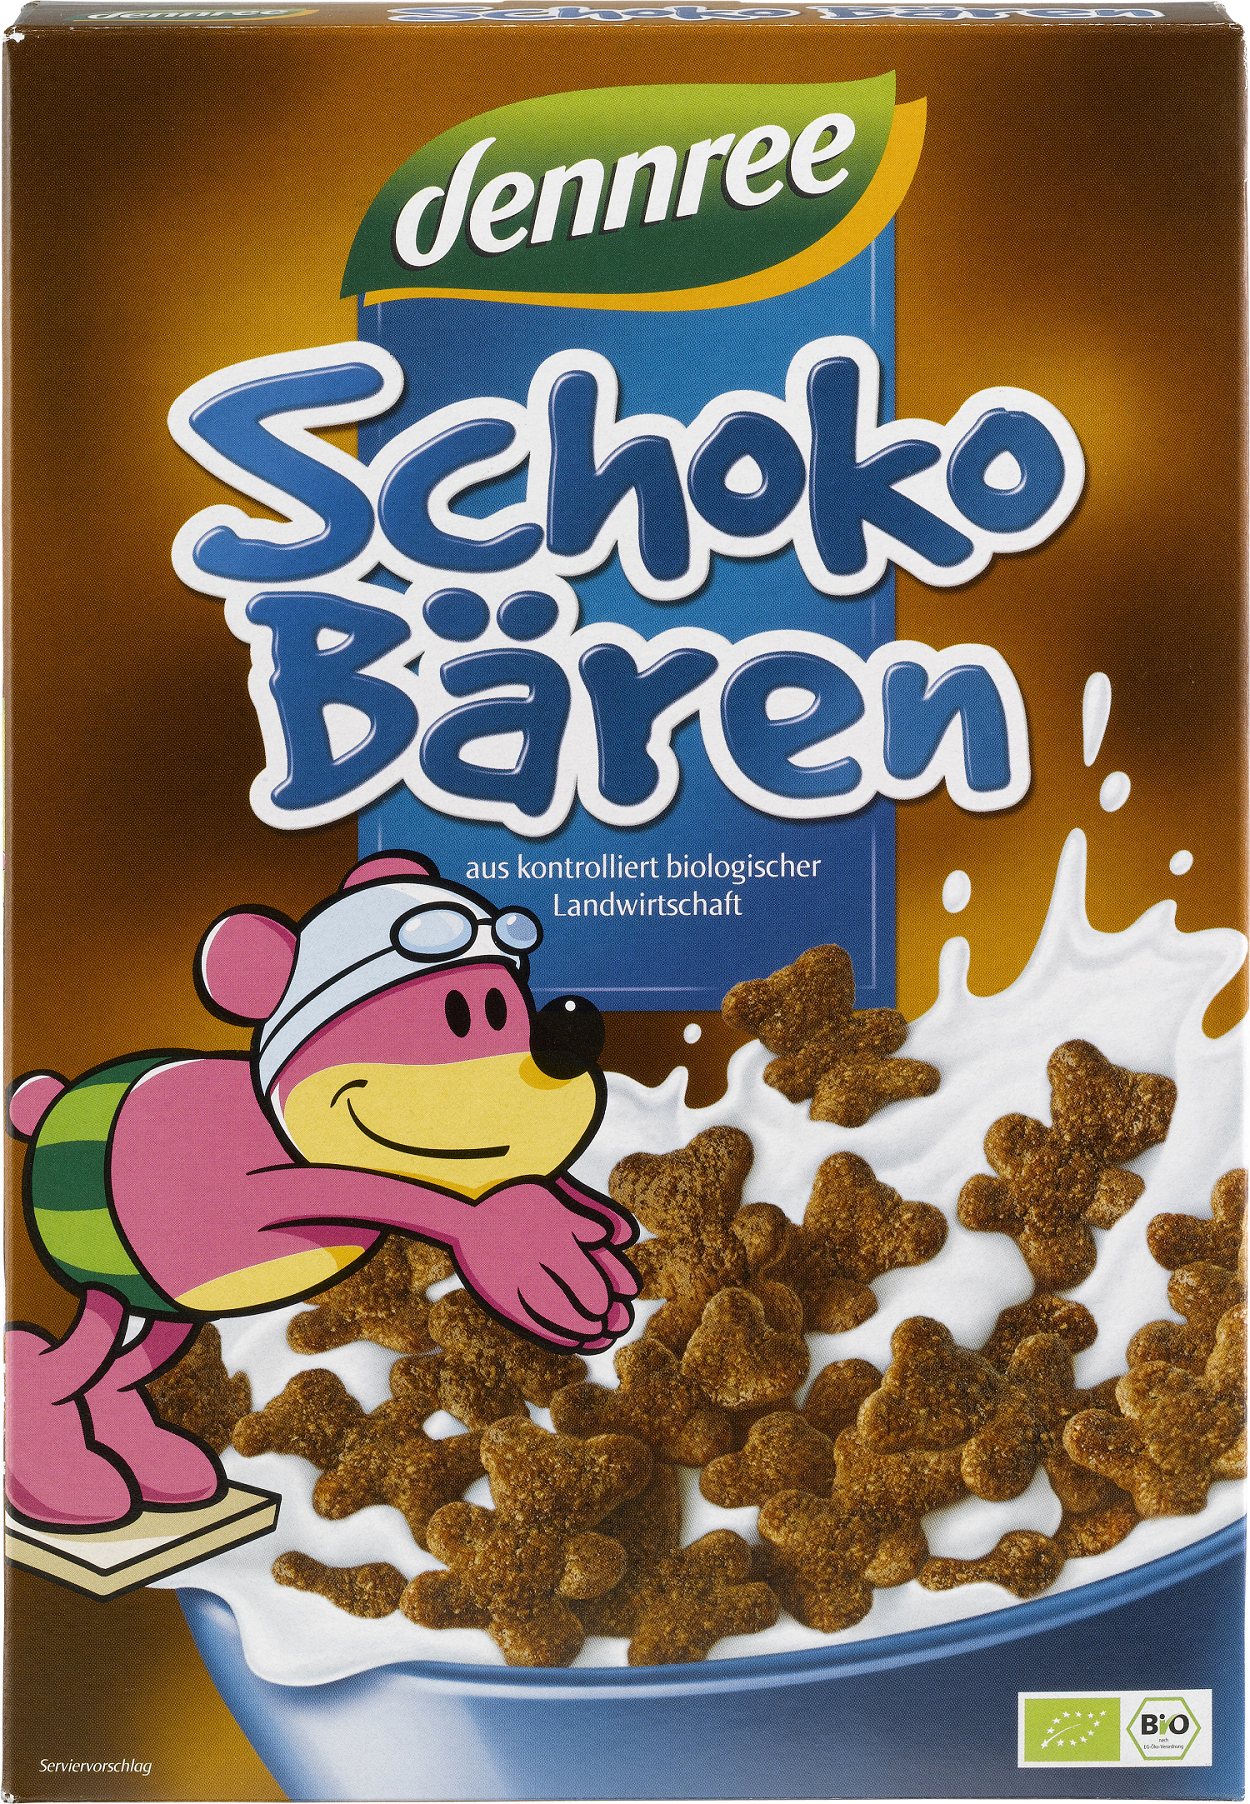 DENNREE Schoko Bären - 250 g